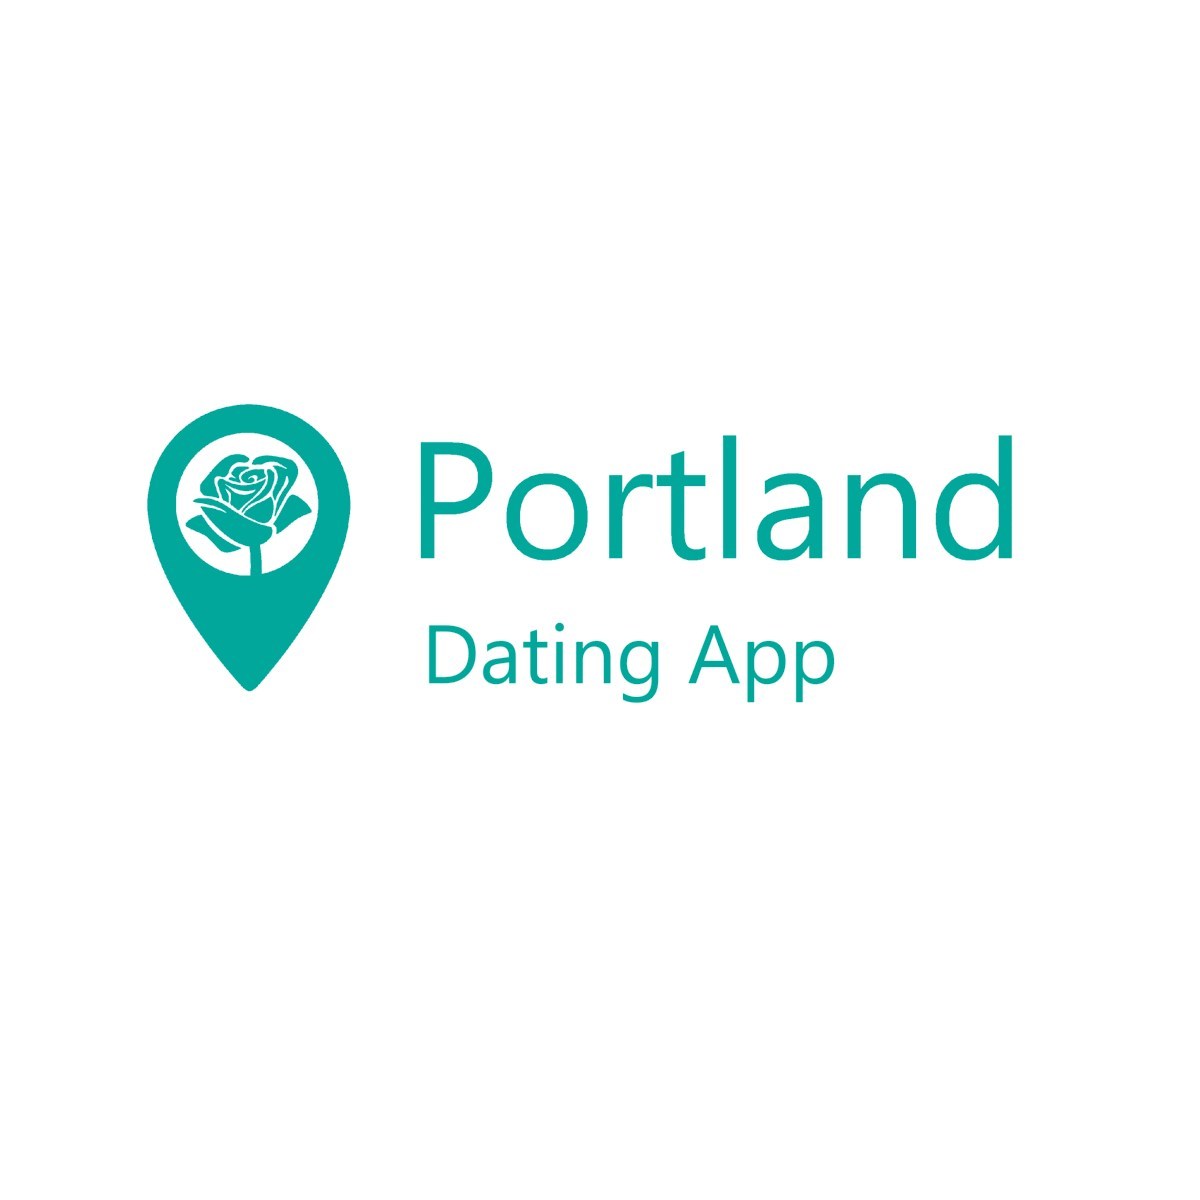 Dating service portland oregon | My Cheeky Date. 2019-09-17